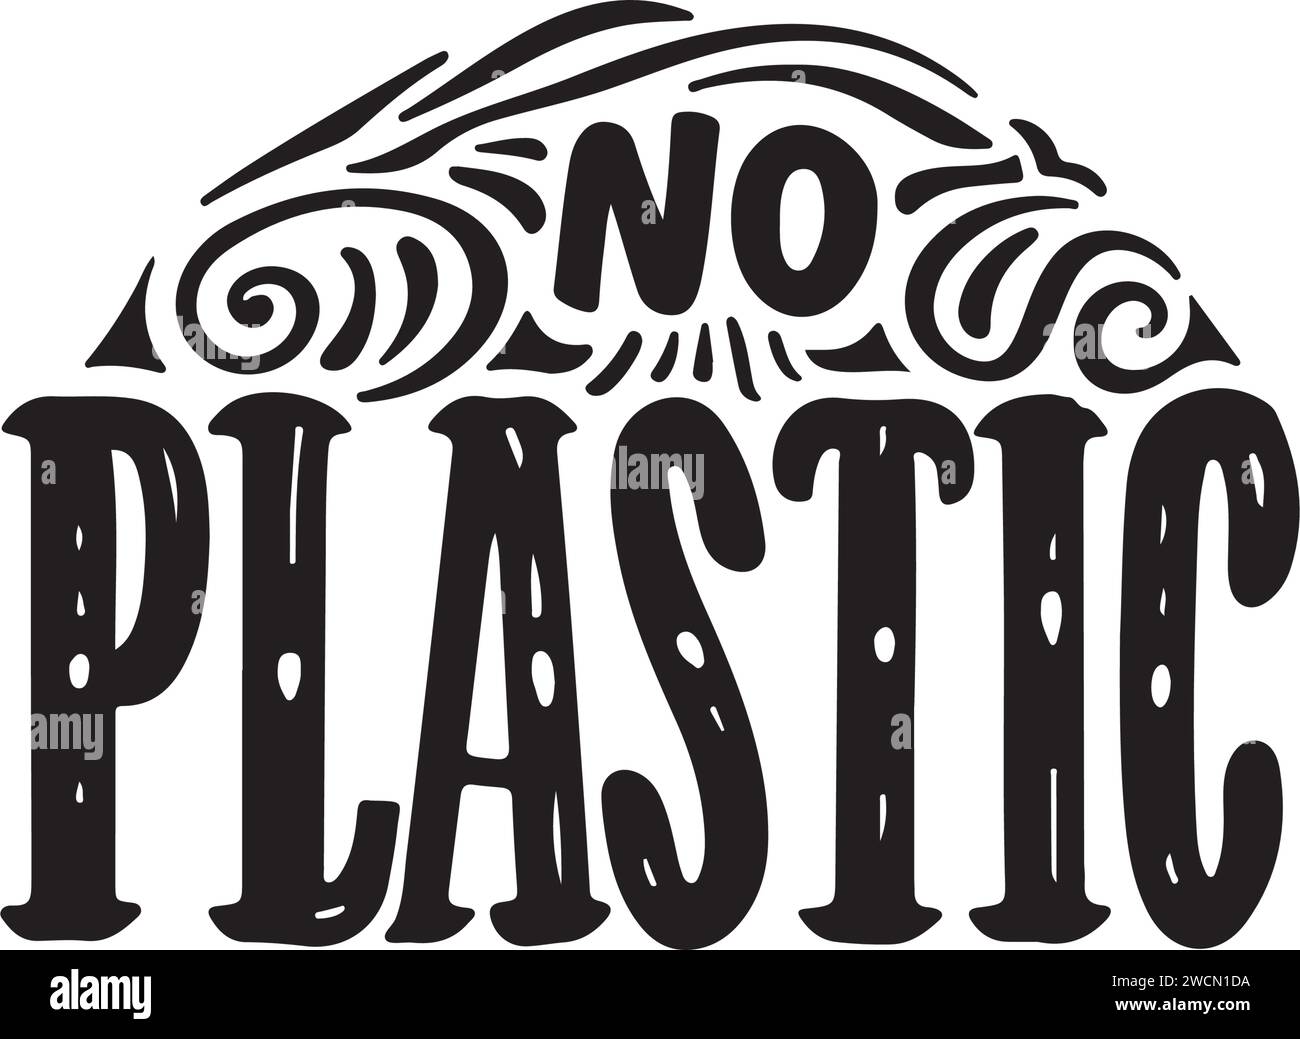 No Plastic slogan lettering calligraphy logo t shirt vector Stock Vector